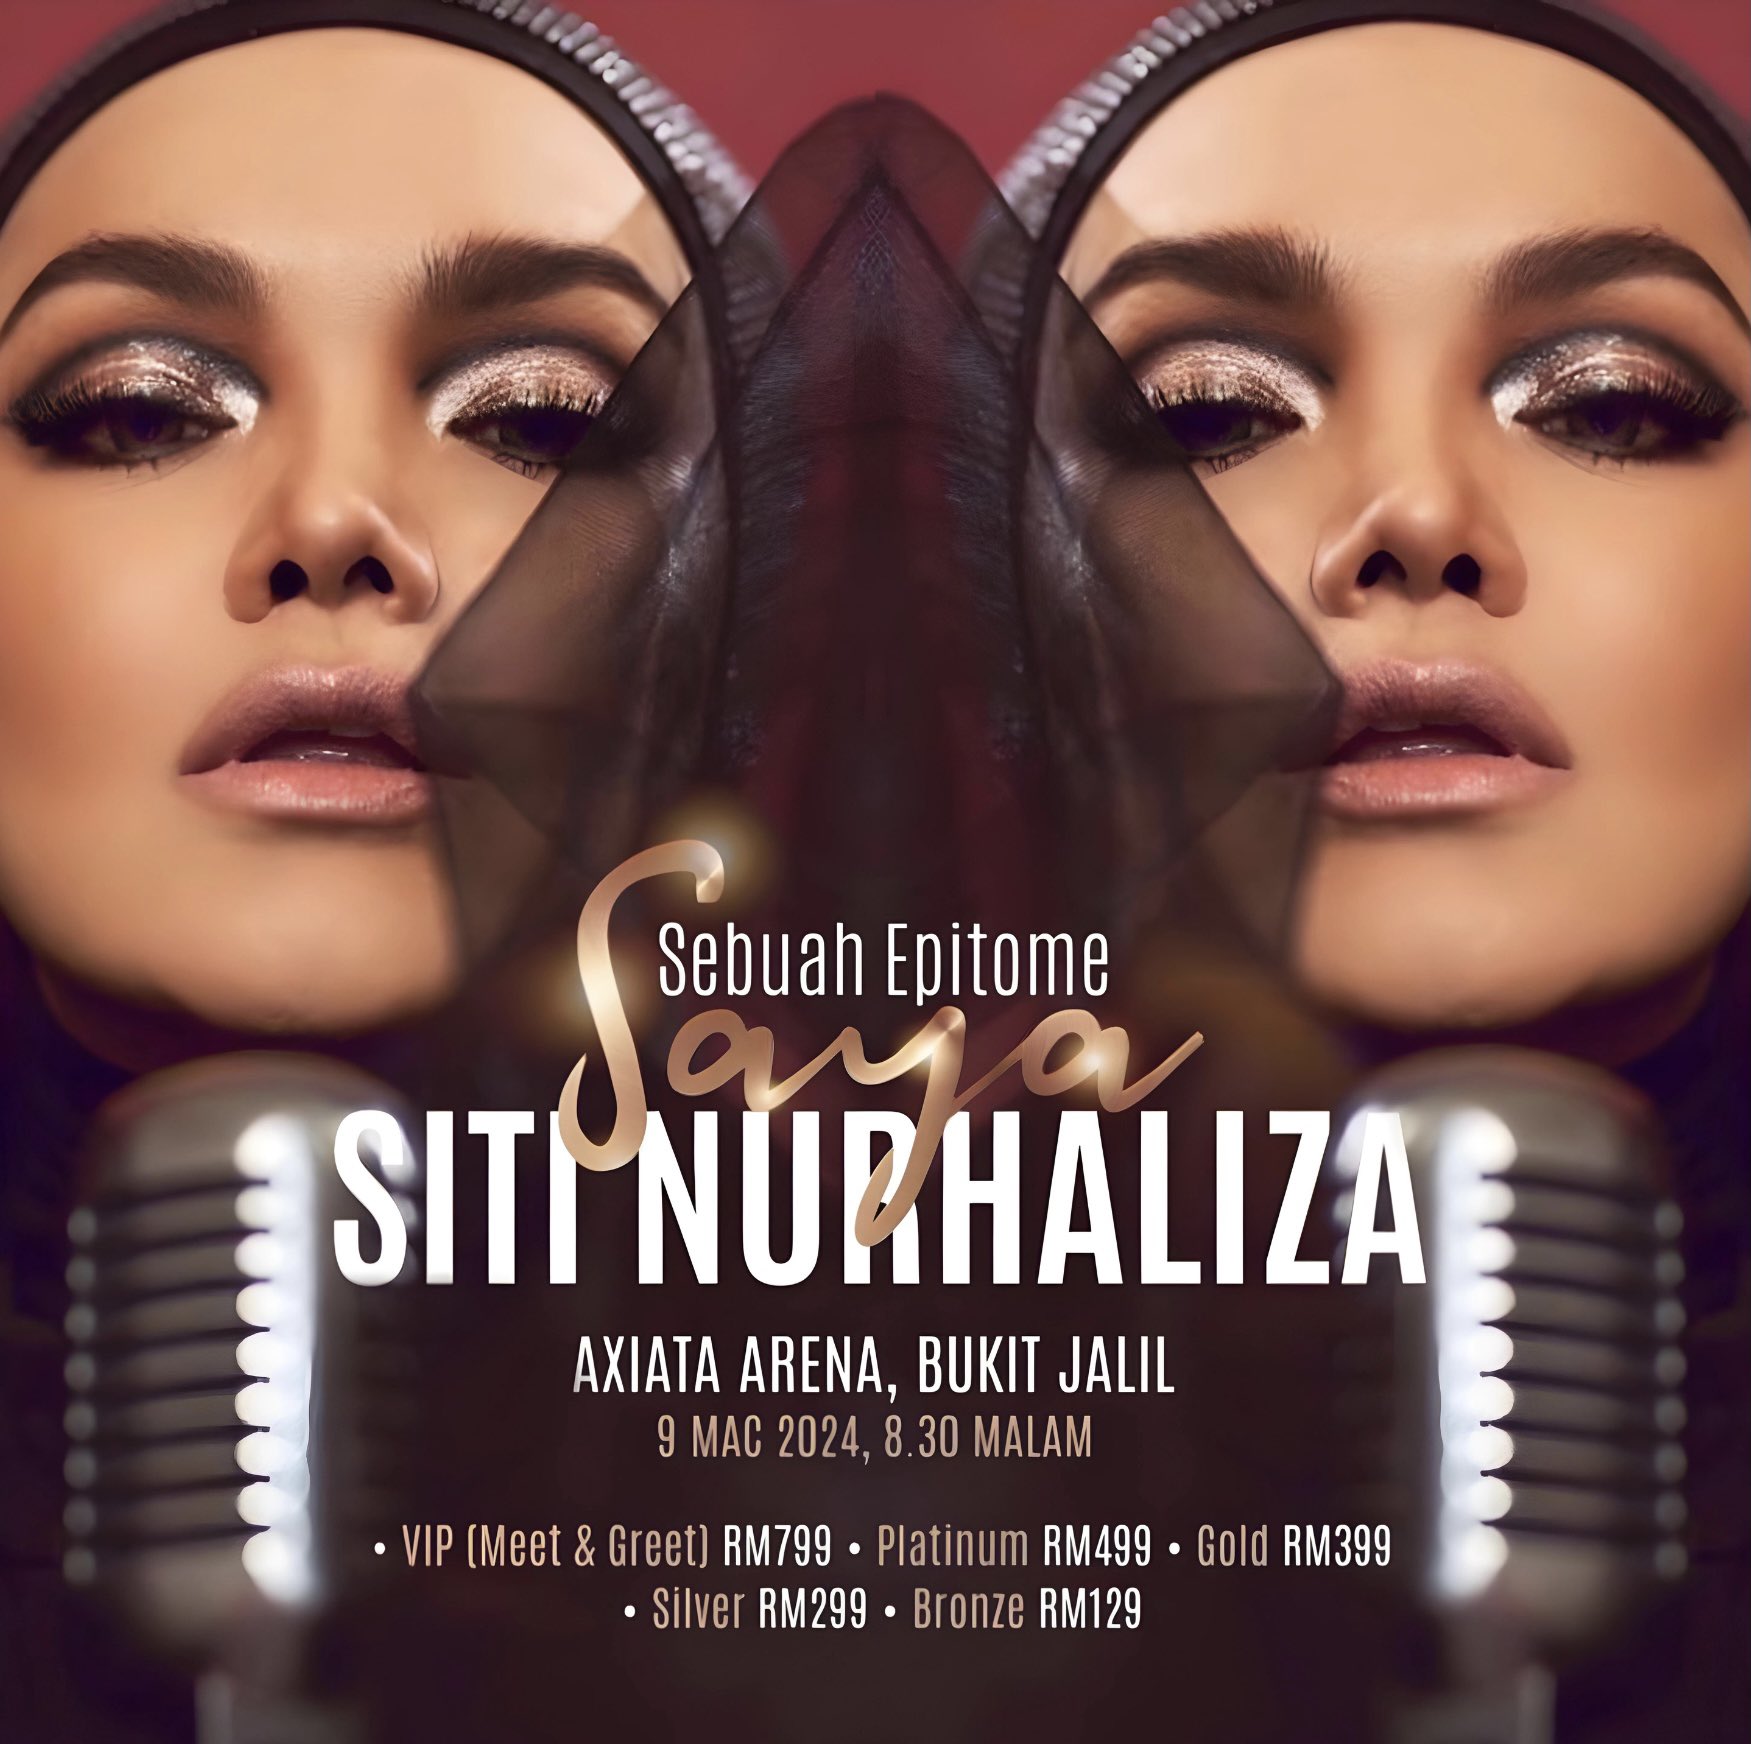 Sebuah Epitome Saya Siti Nurhaliza Concert Kuala Lumpur (Tickets)